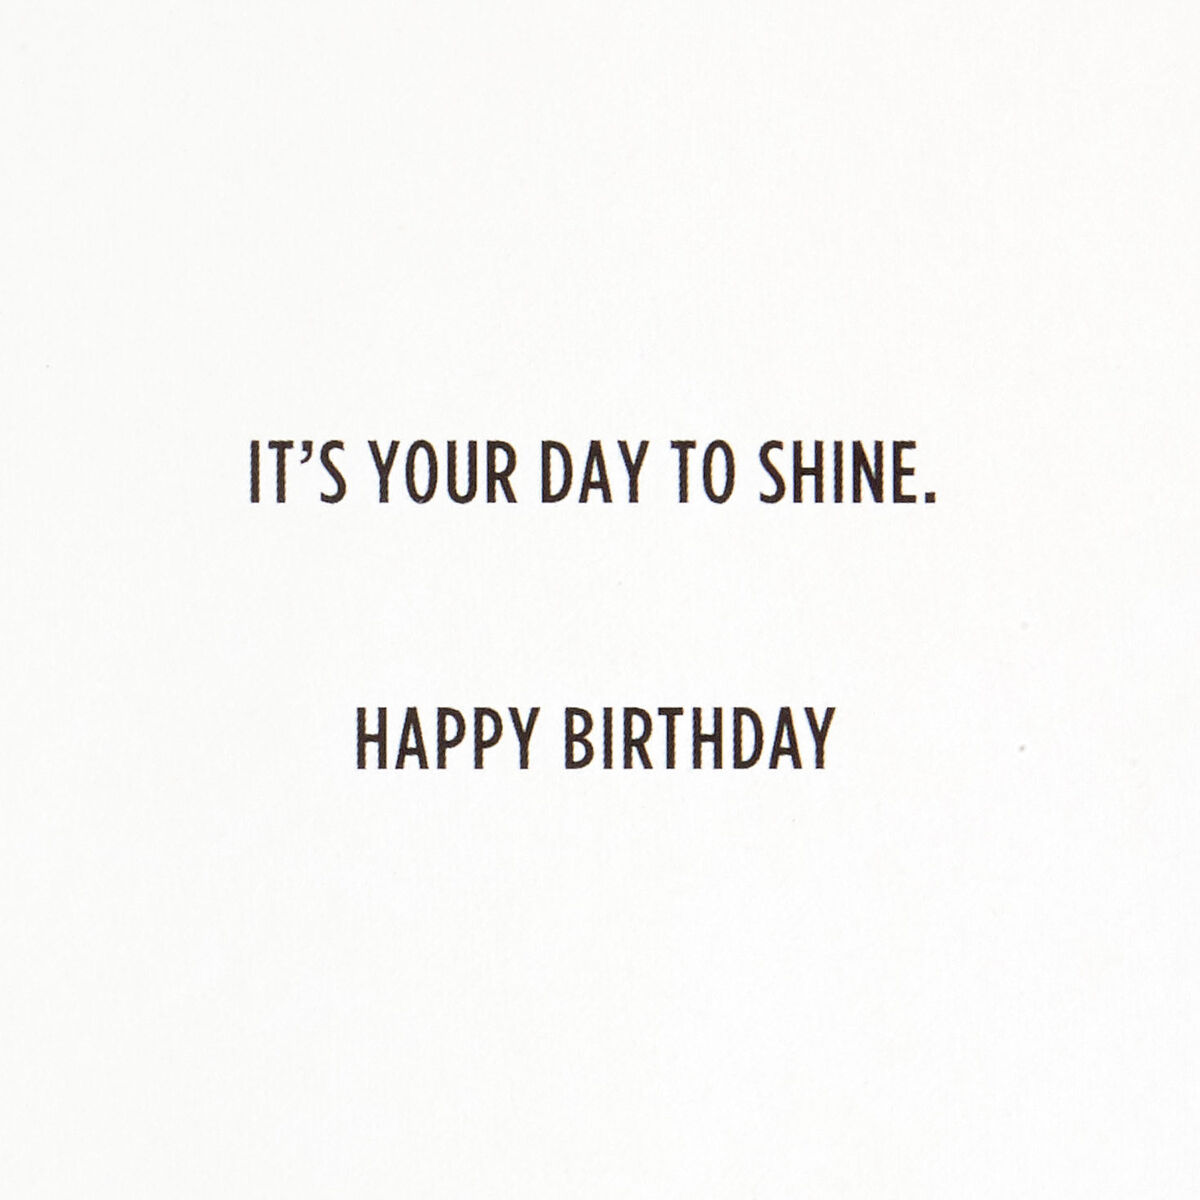 Your Day To Shine Glittery Birthday Card - Greeting Cards - Hallmark